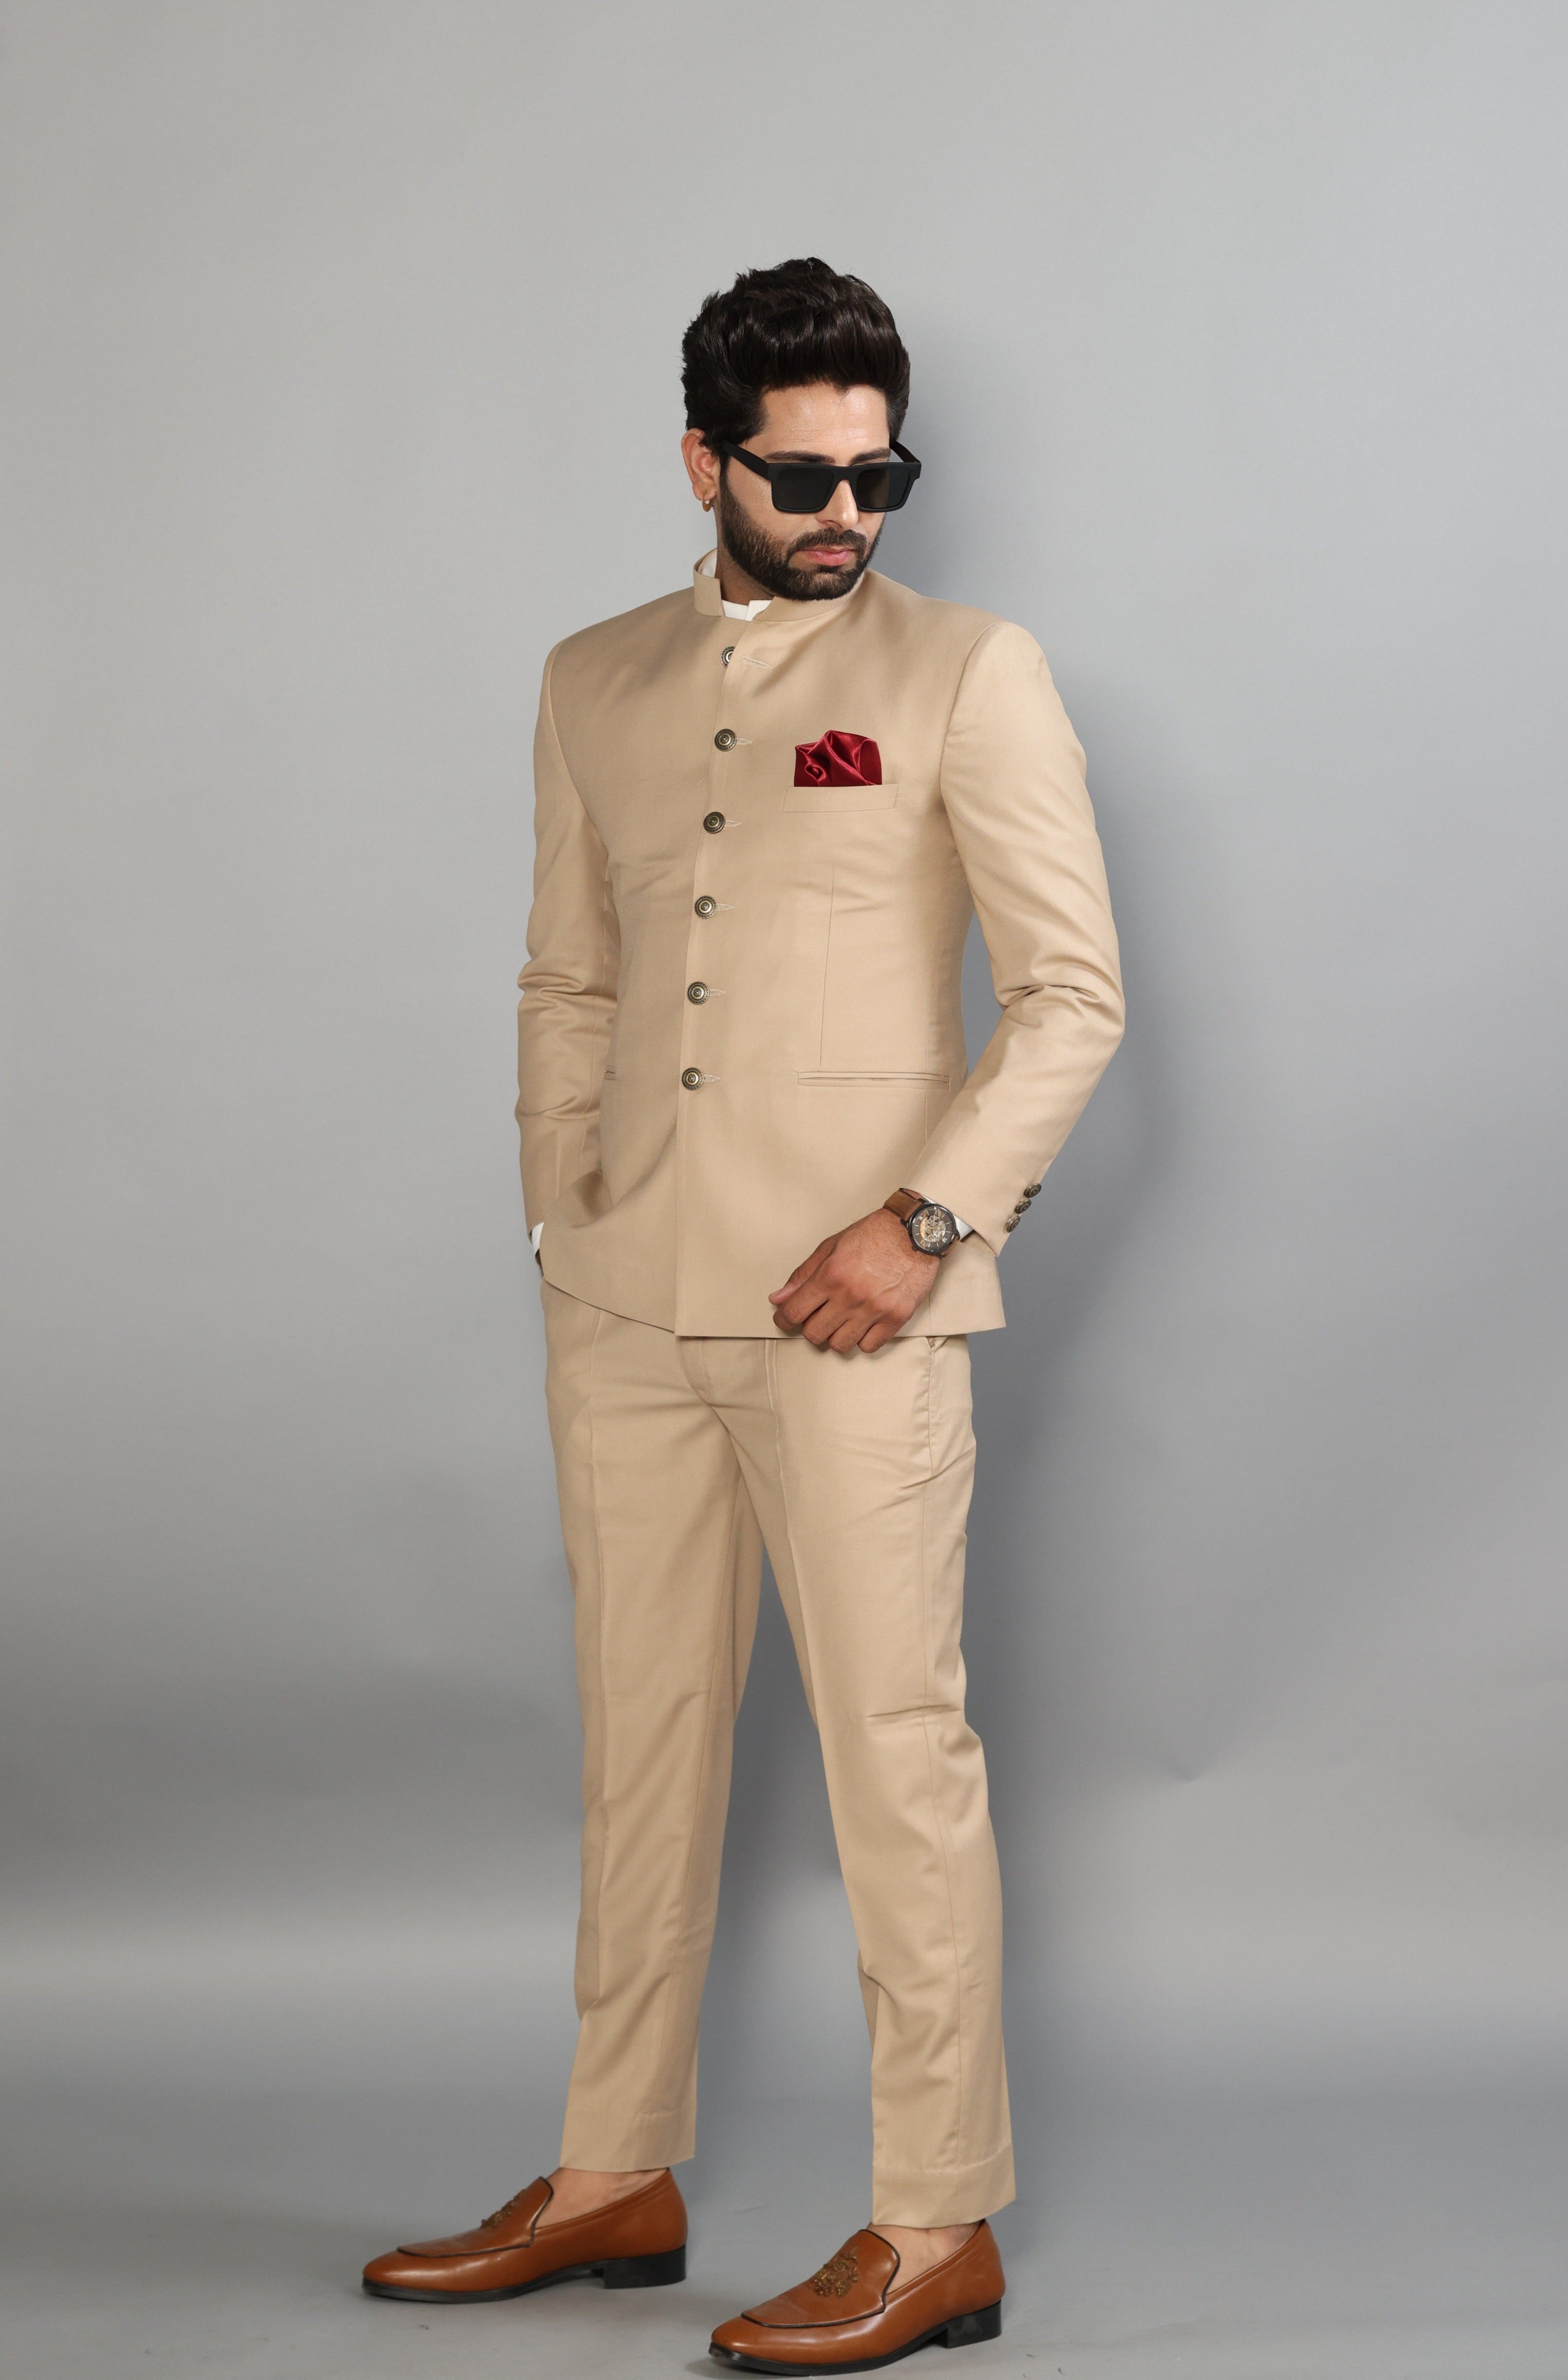 Men Elegant Blue Jodhpuri Suit Designer Formal Wedding Jacket Slim Fit Coat  Pant | eBay